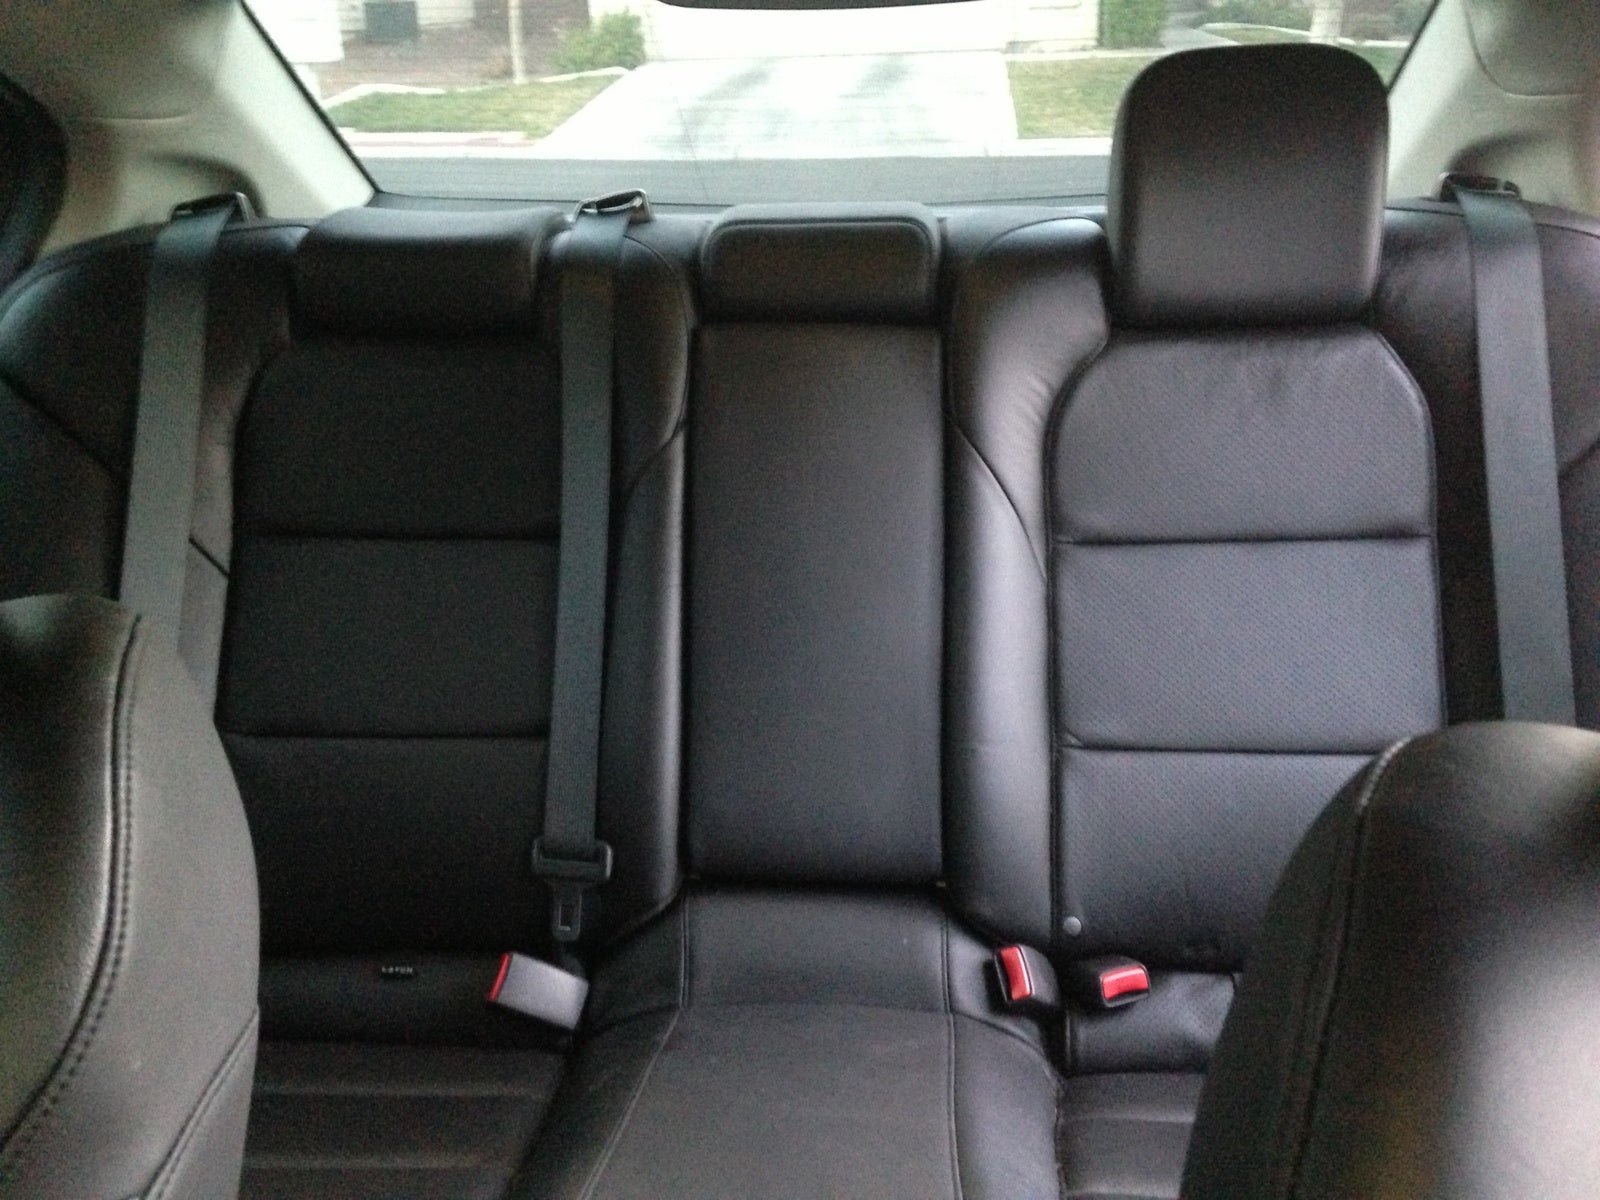 2012 Acura TL - Review - CarGurus 2012 Acura Tl Back Seats Fold Down